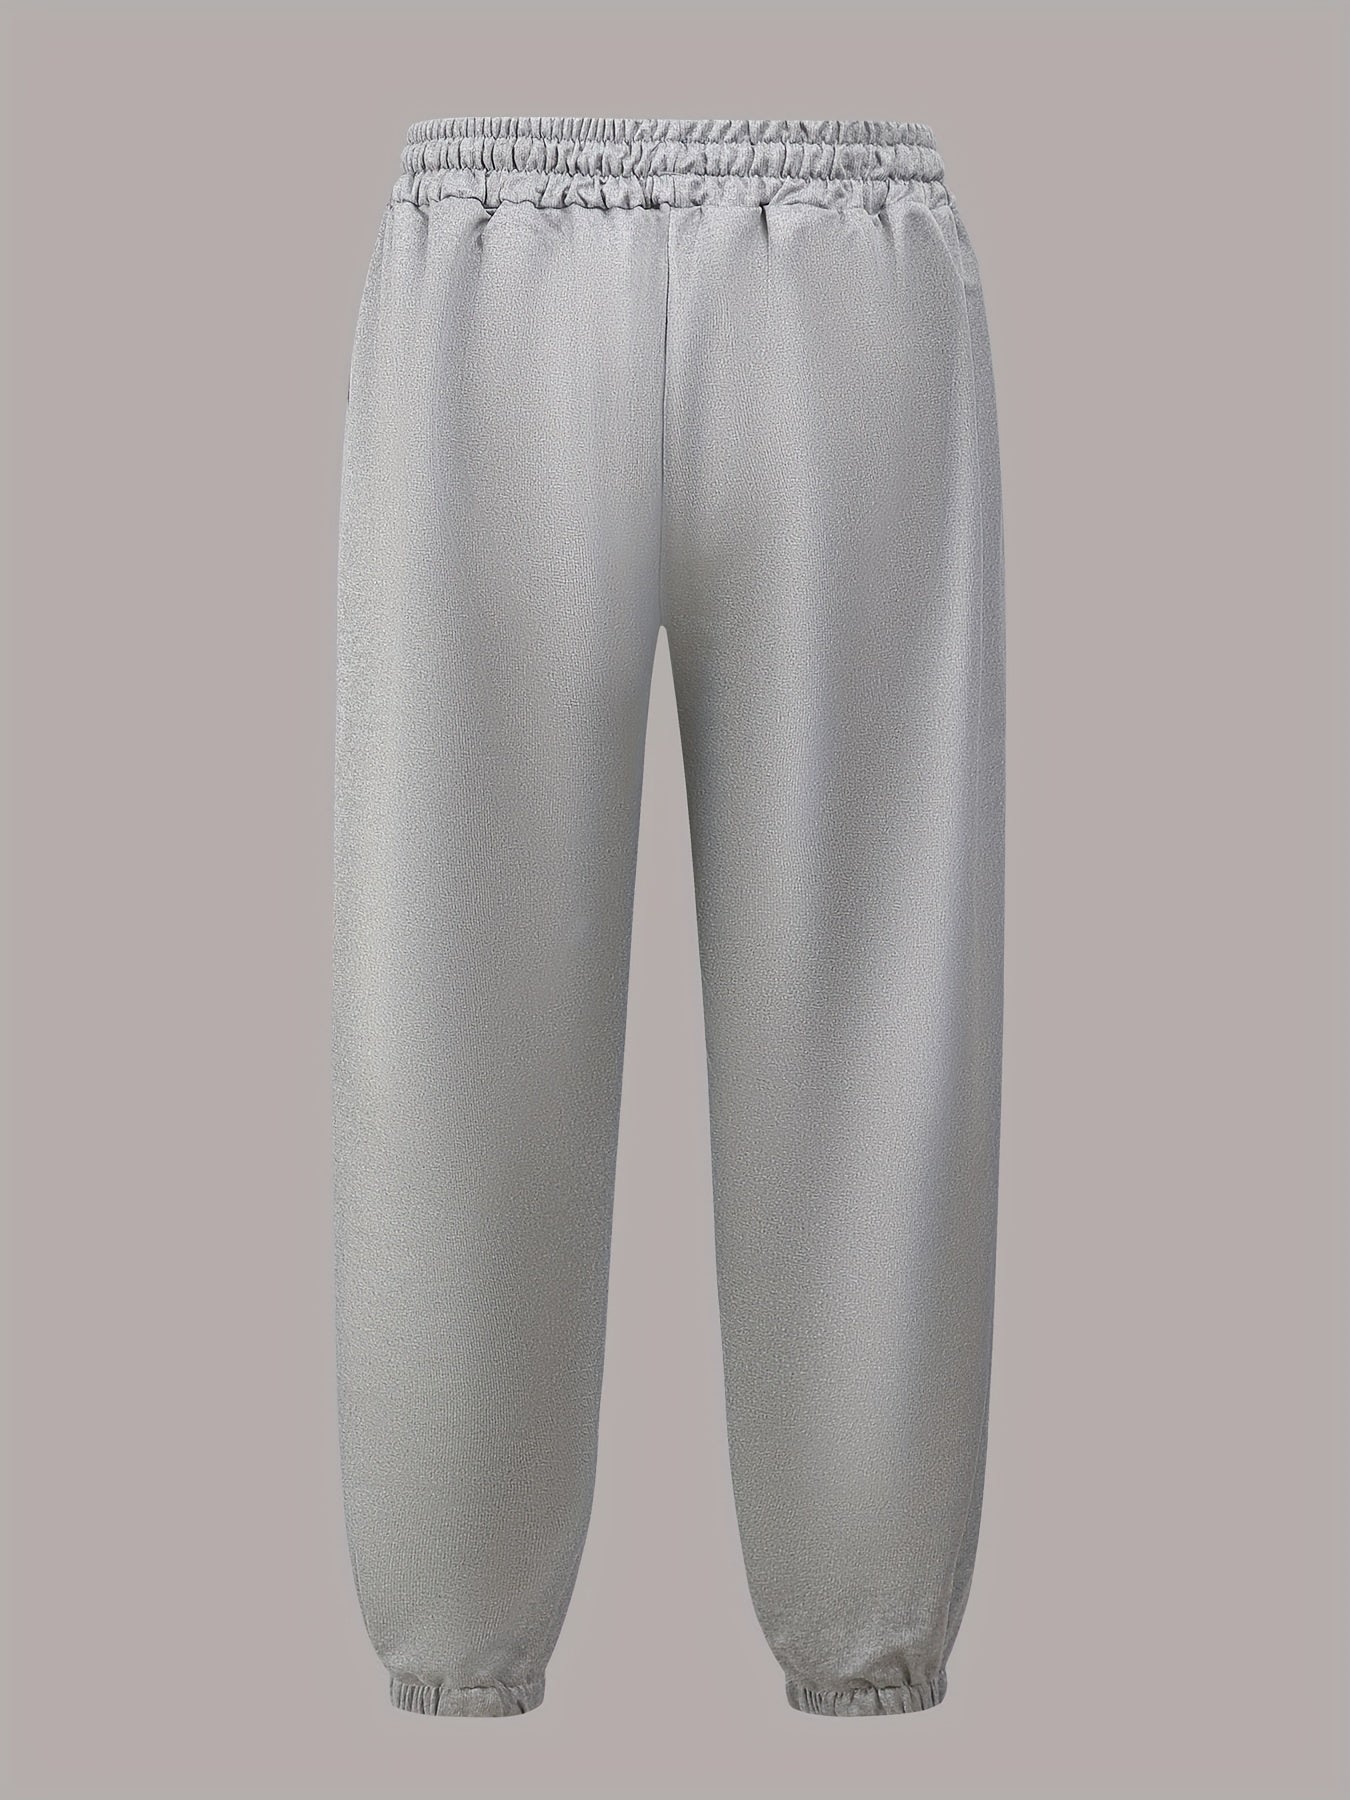 Halloween Ghost Print Trendy Sweatpants Loose Fit Pants Men's Casual Joggers For Men Fall Winter Running Jogging